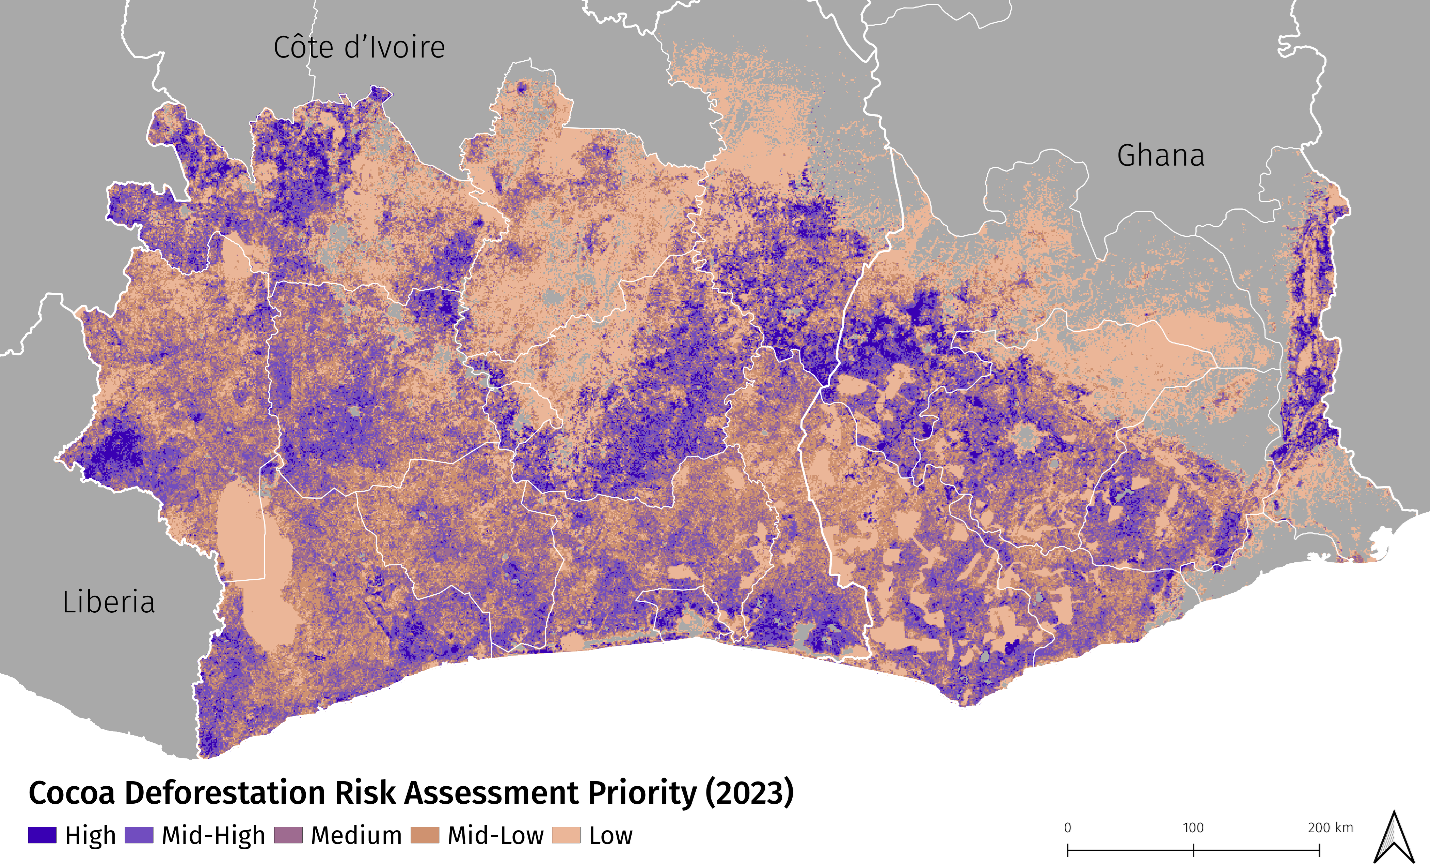 Cocoa deforestation risk assessment priority map for 2023